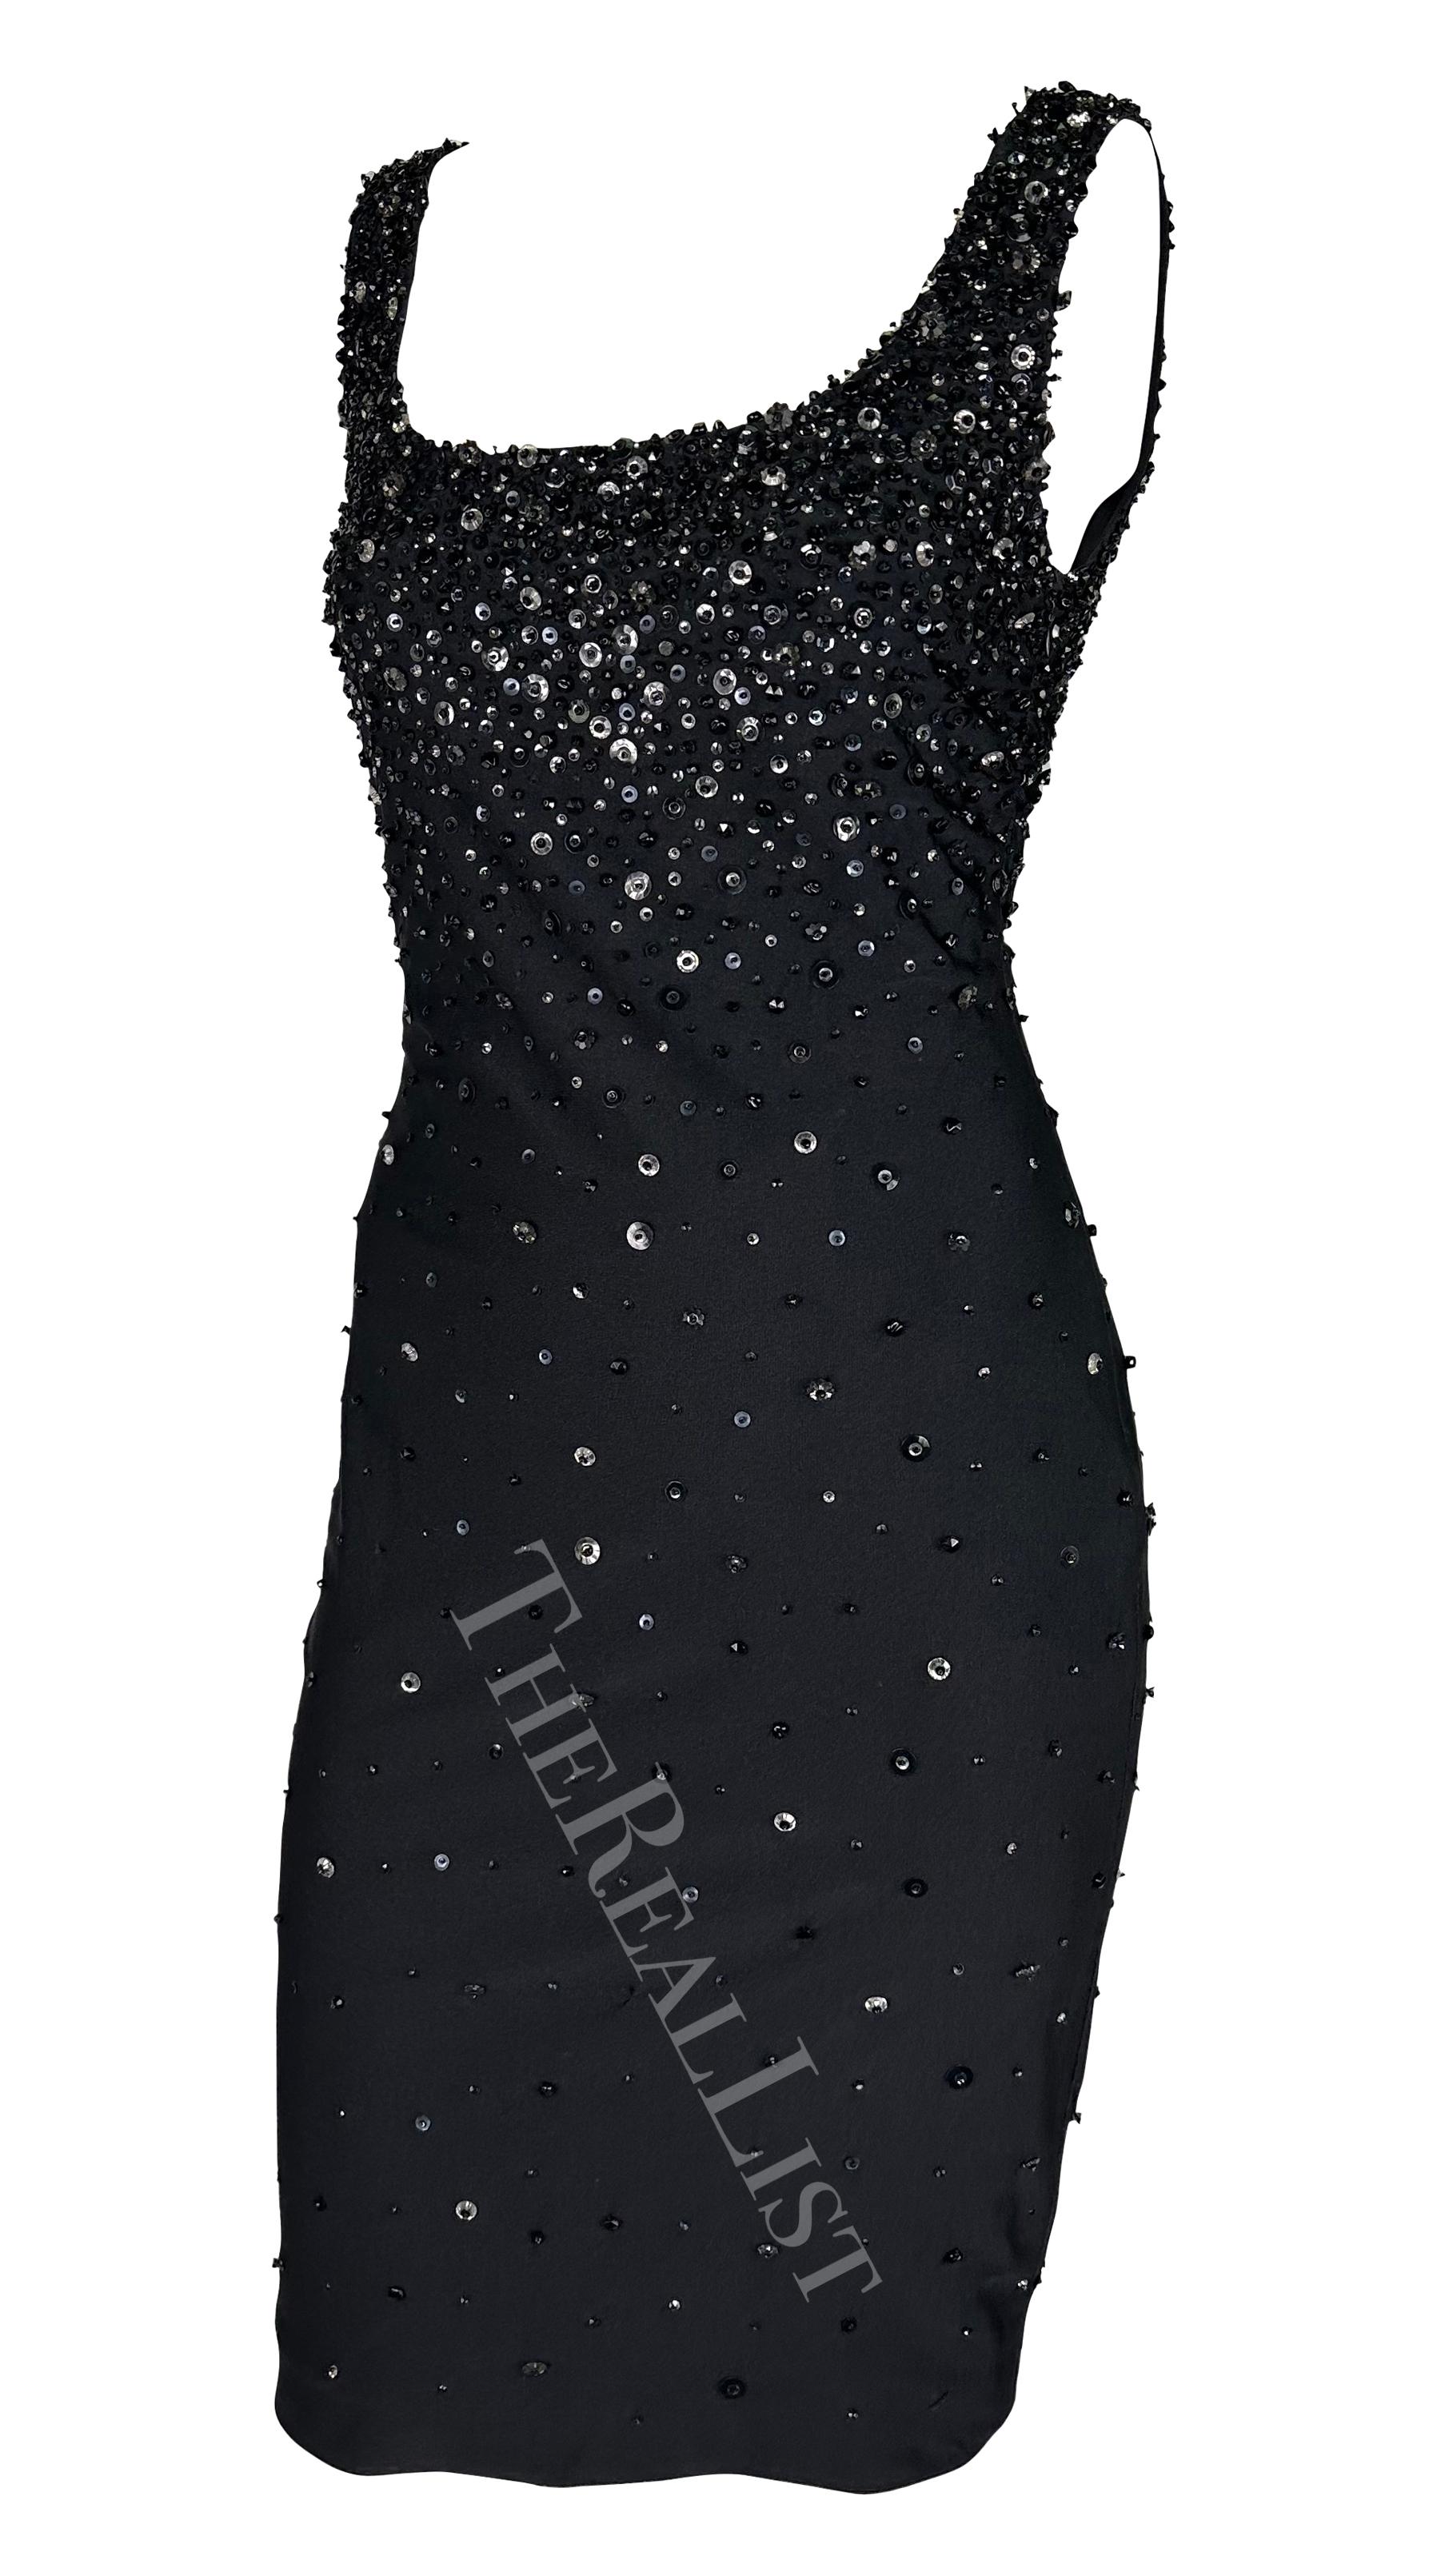 S/S 1996 Gianni Versace Black Beaded Sleeveless Bodycon Runway Dress For Sale 1